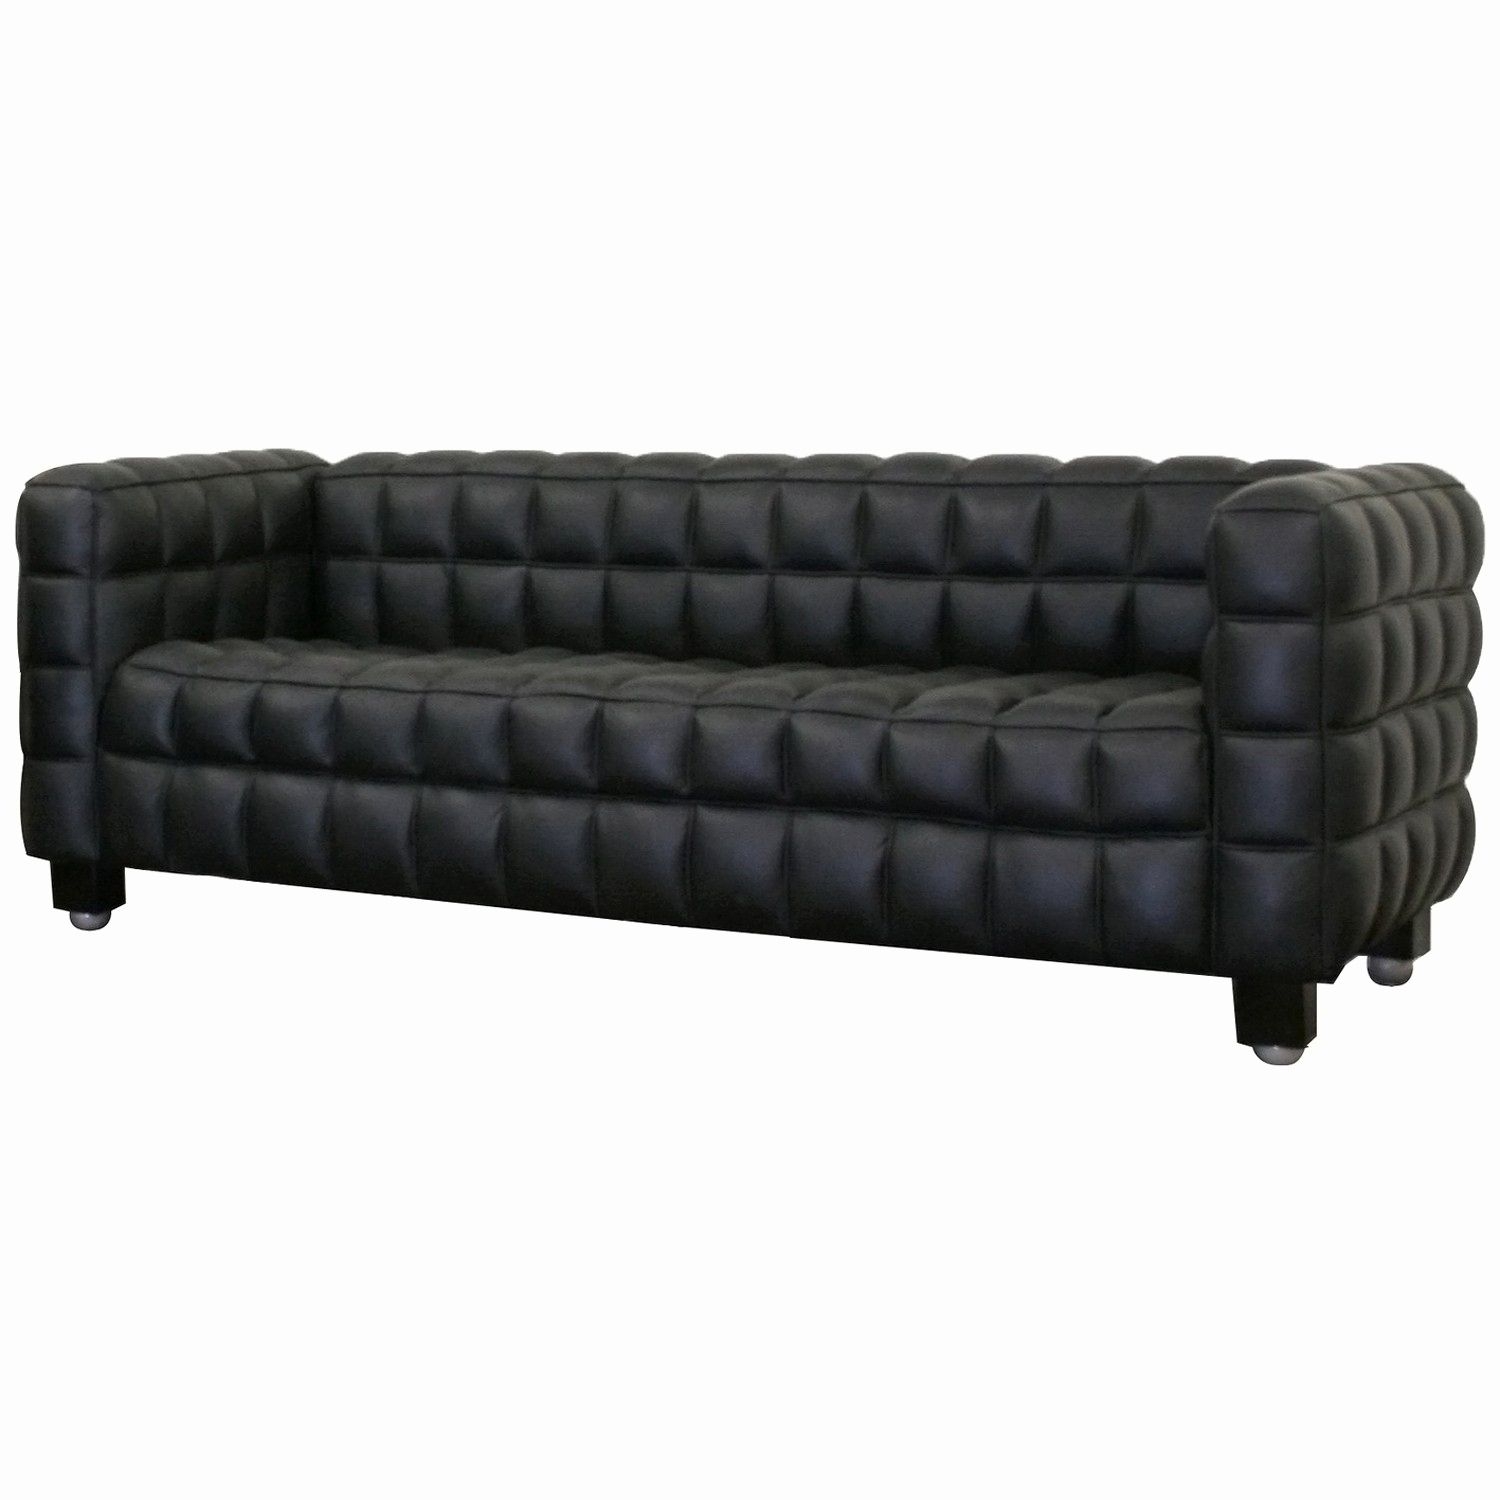 Baxton Studio Arriga Leather Modern Sofa, Black